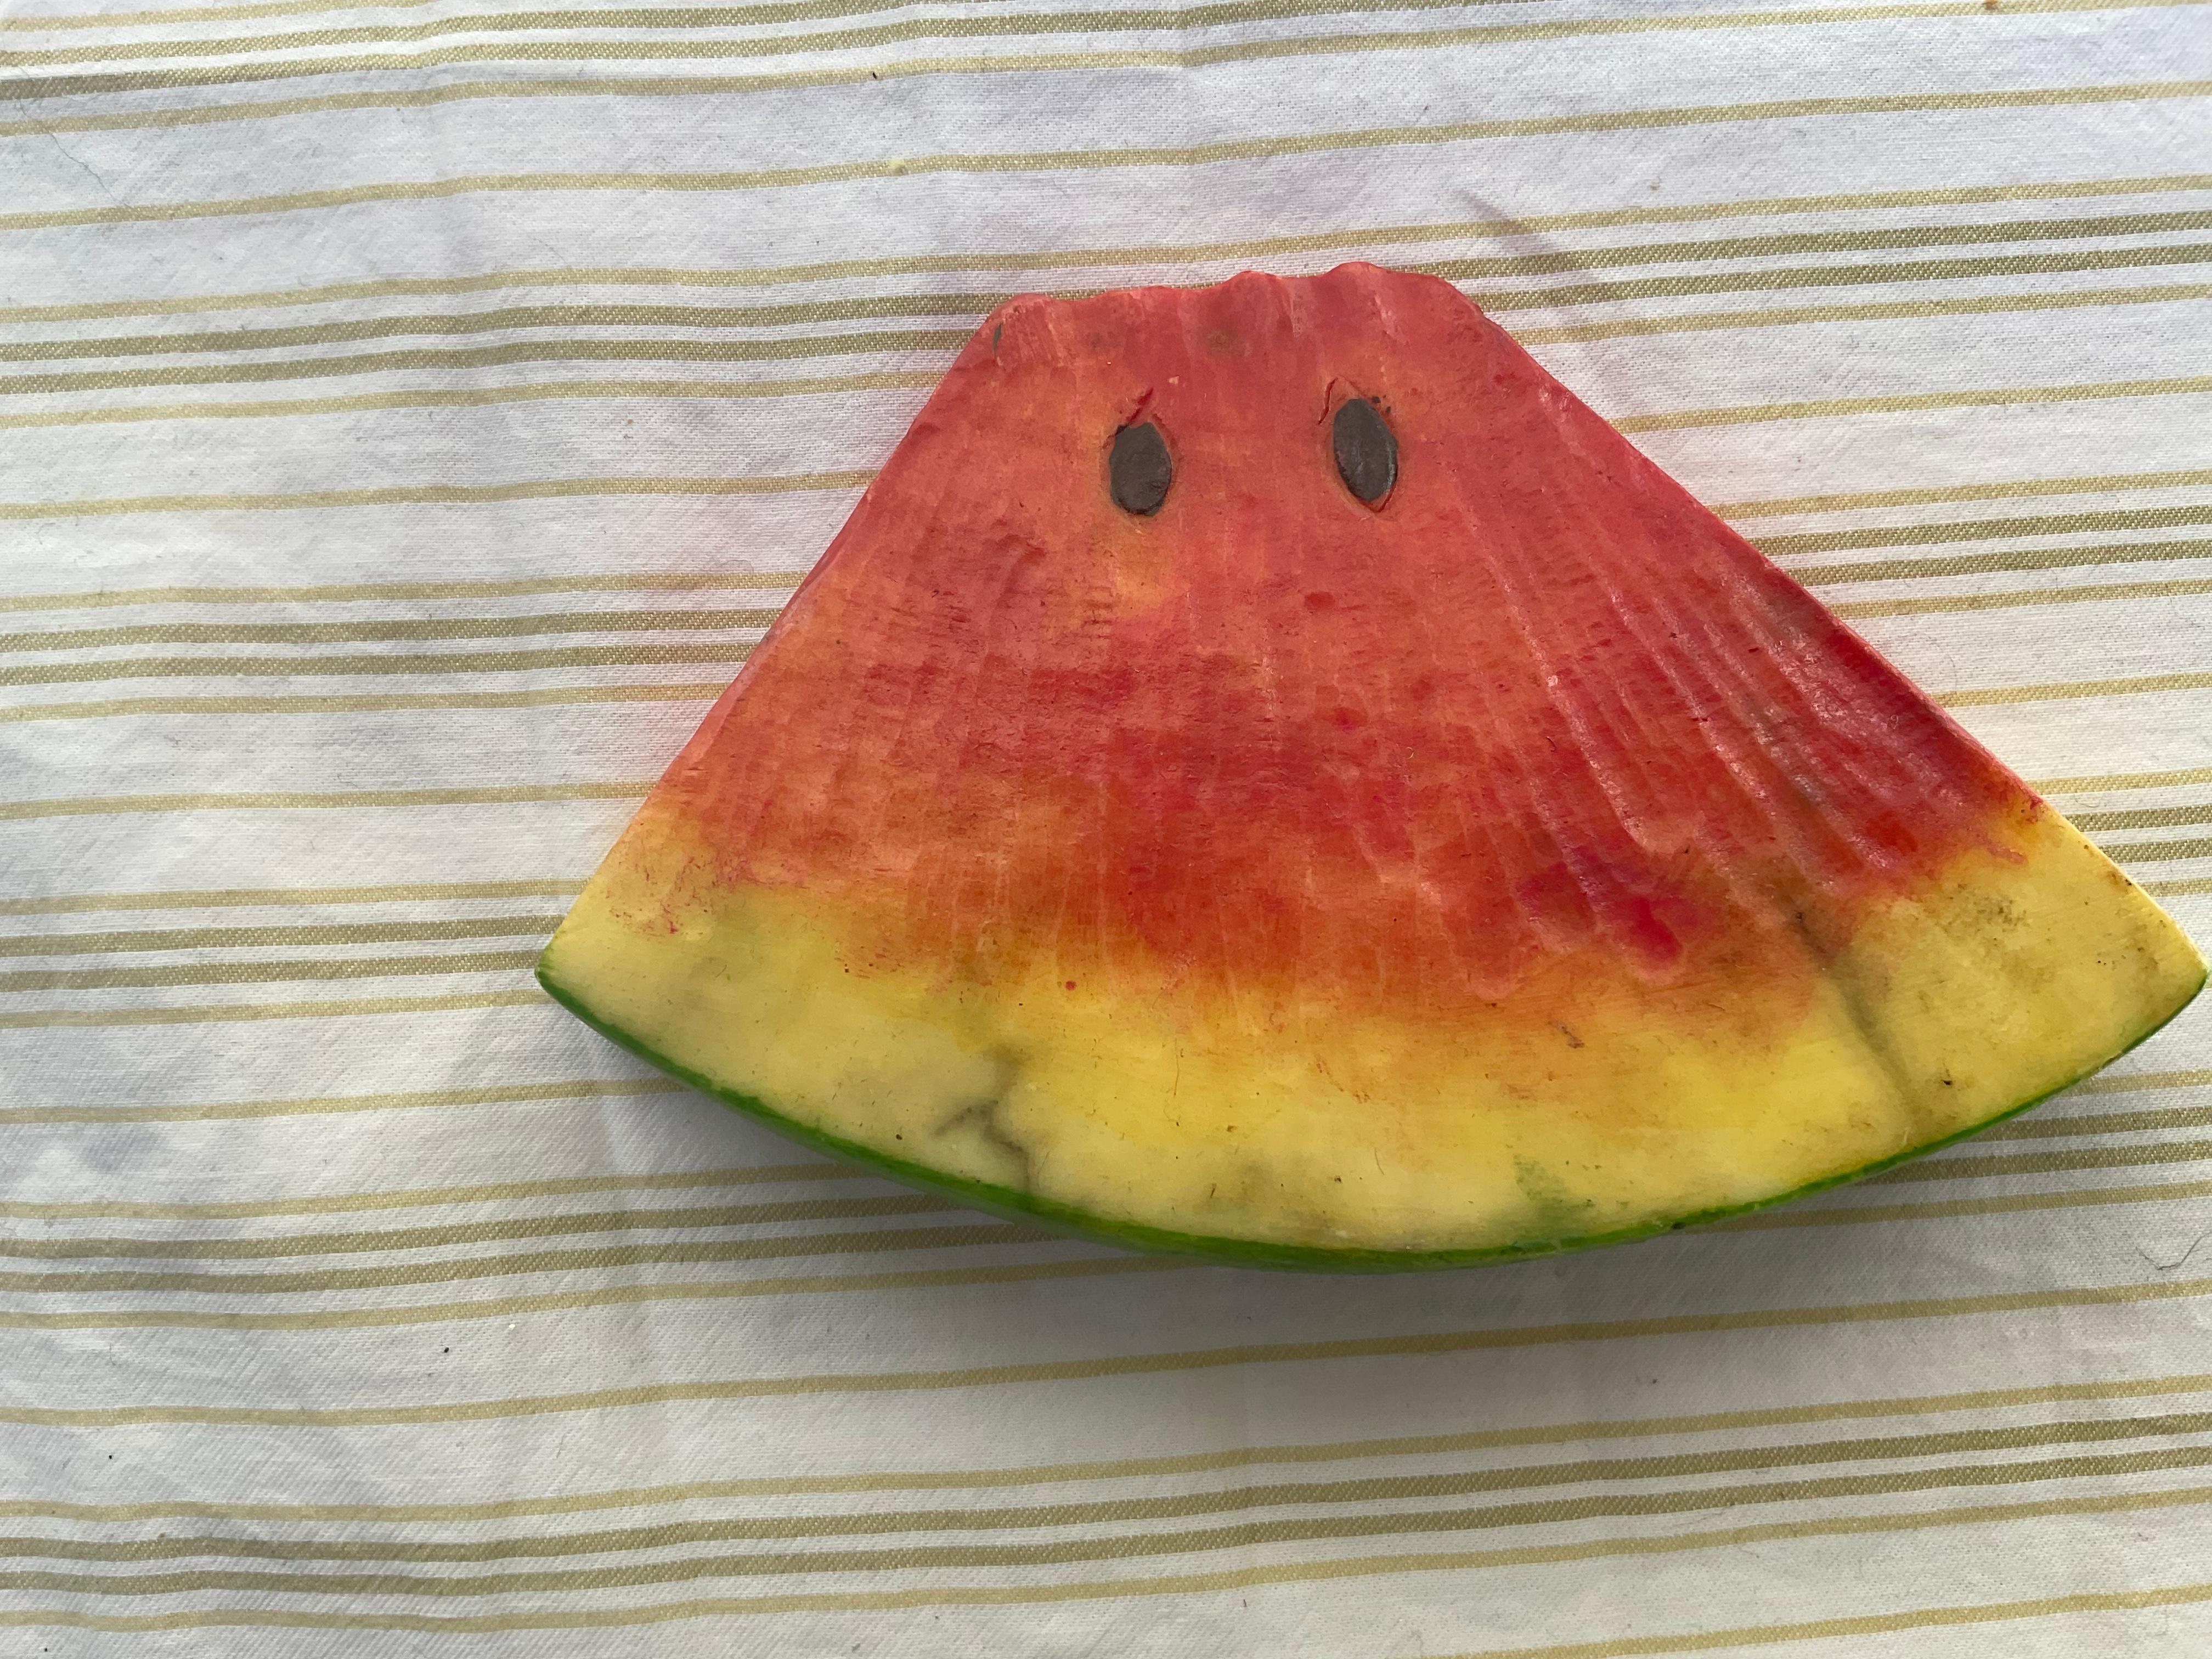 1960s Italian Stone Fruit, Watermelon Slices, 3 2